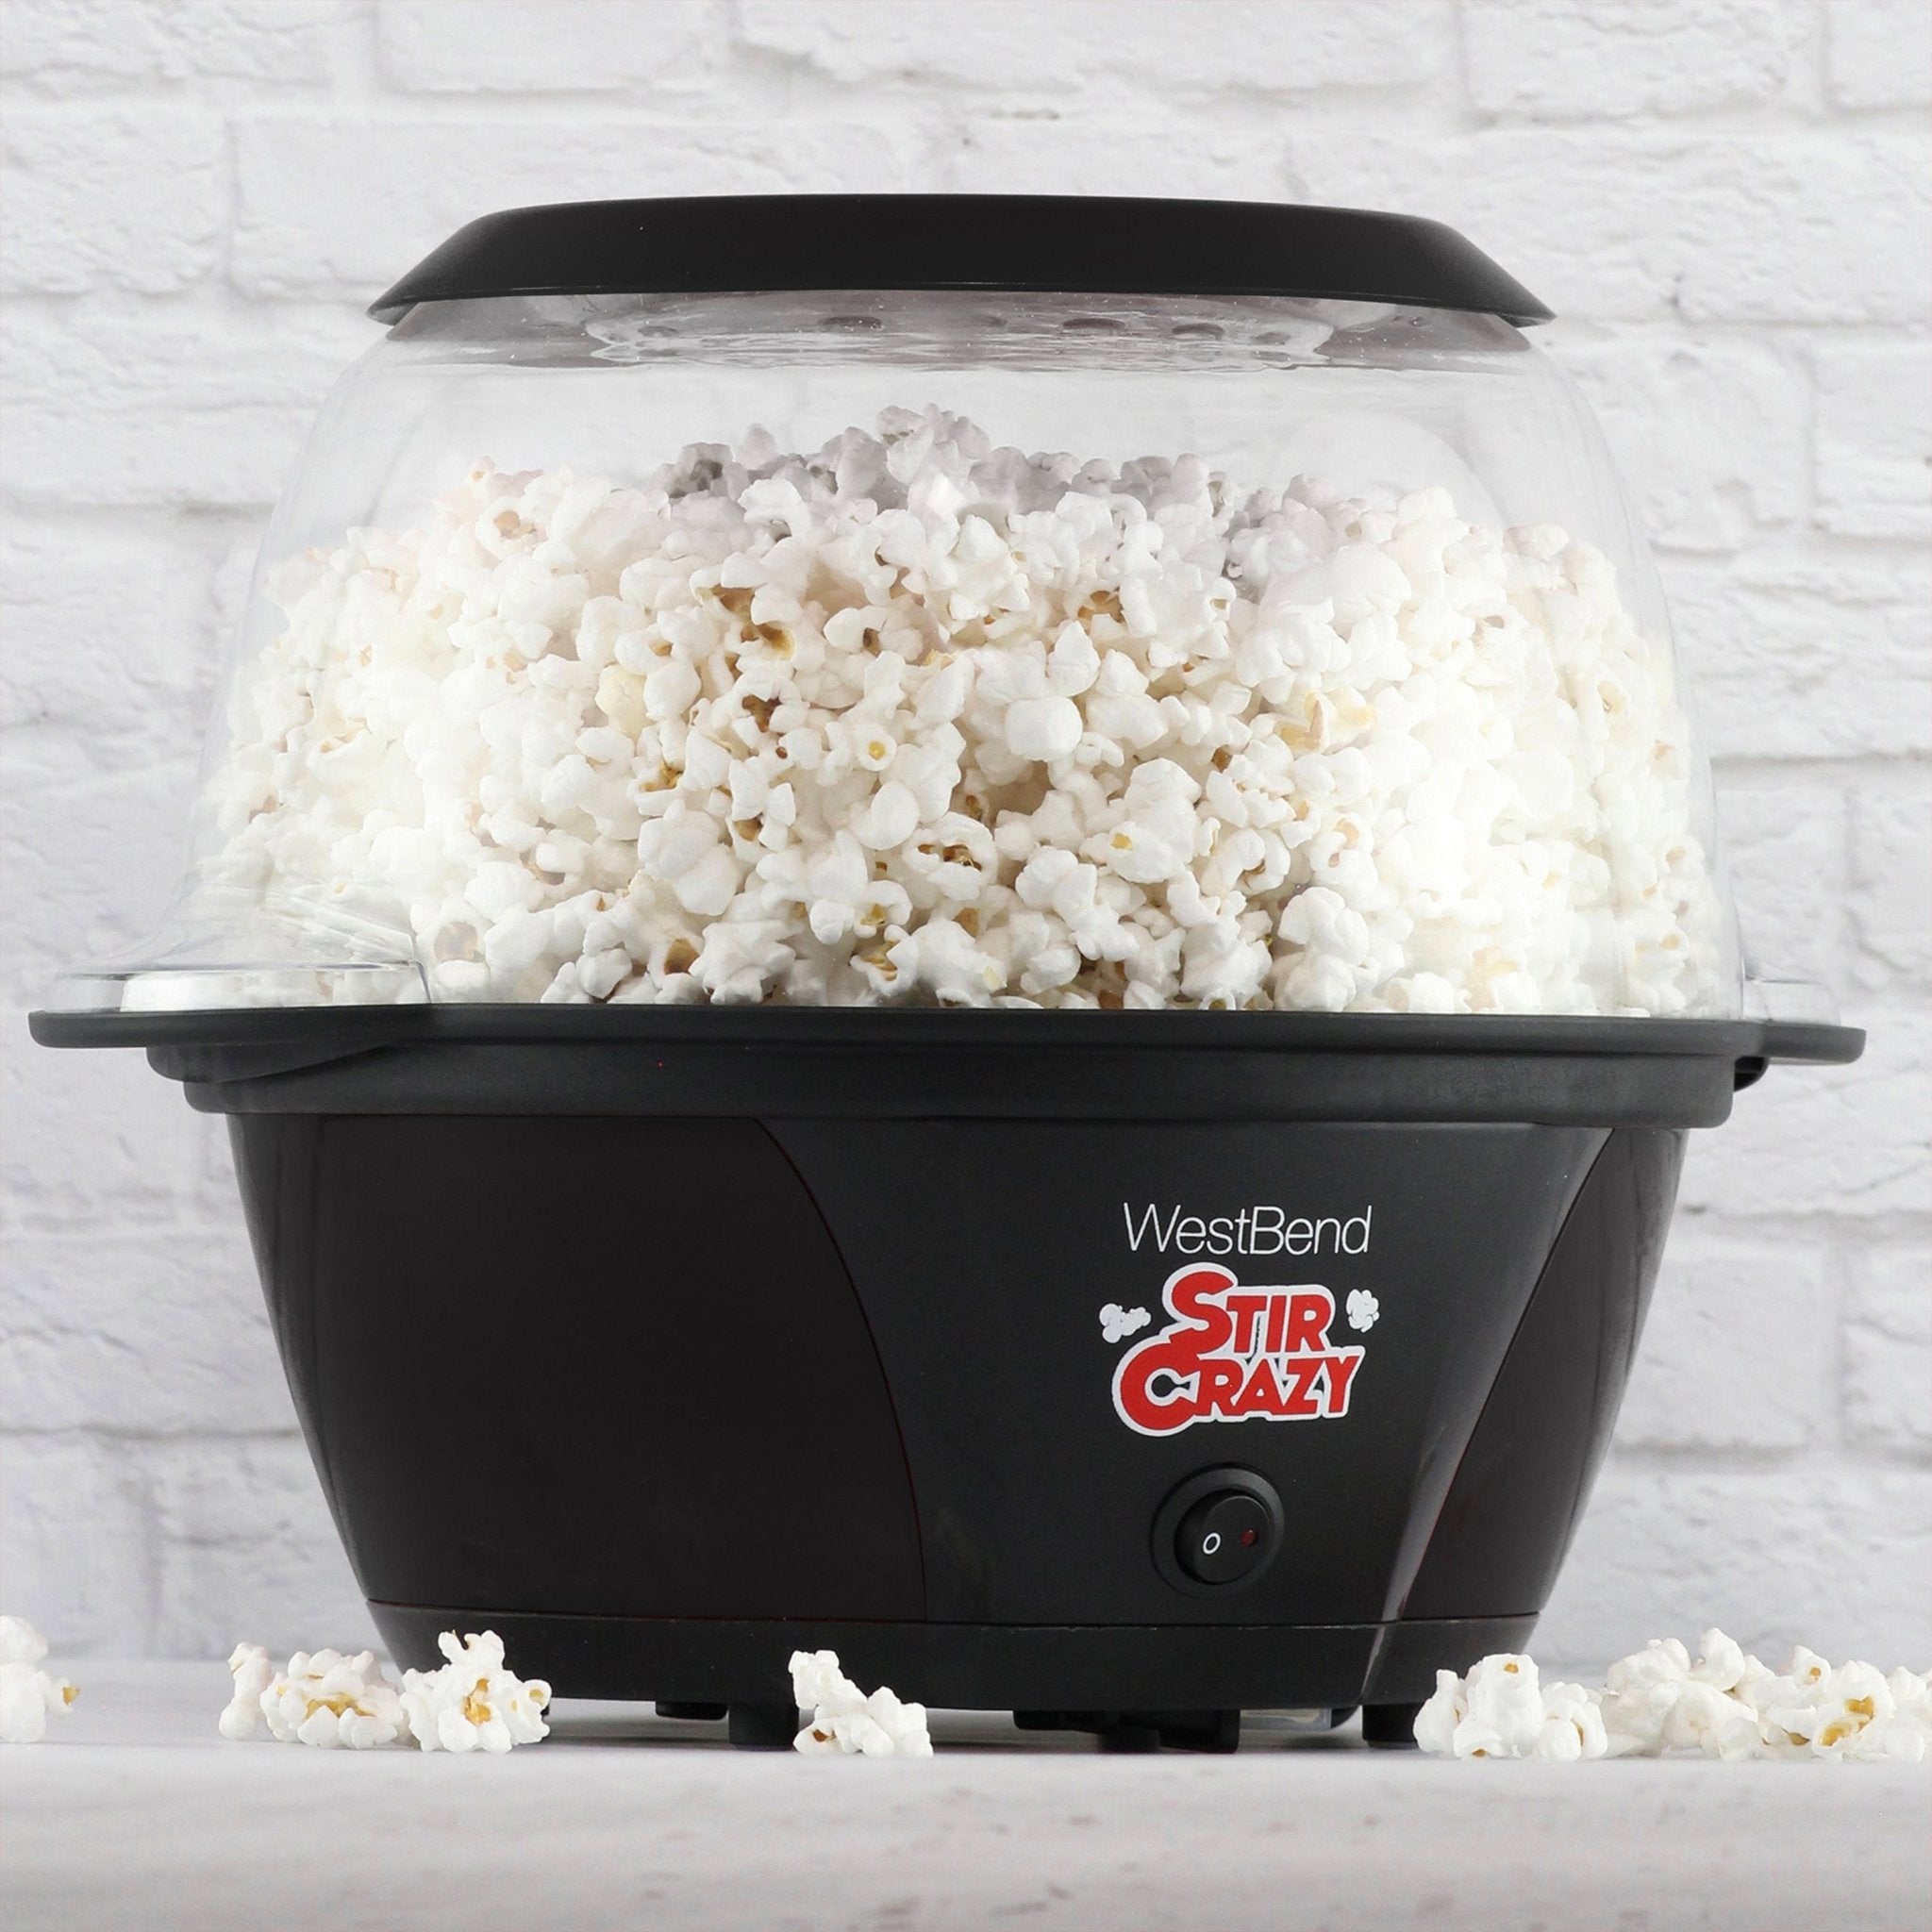 West Bend Stir Crazy 82306 6-Quart Electric Popcorn Maker Corn